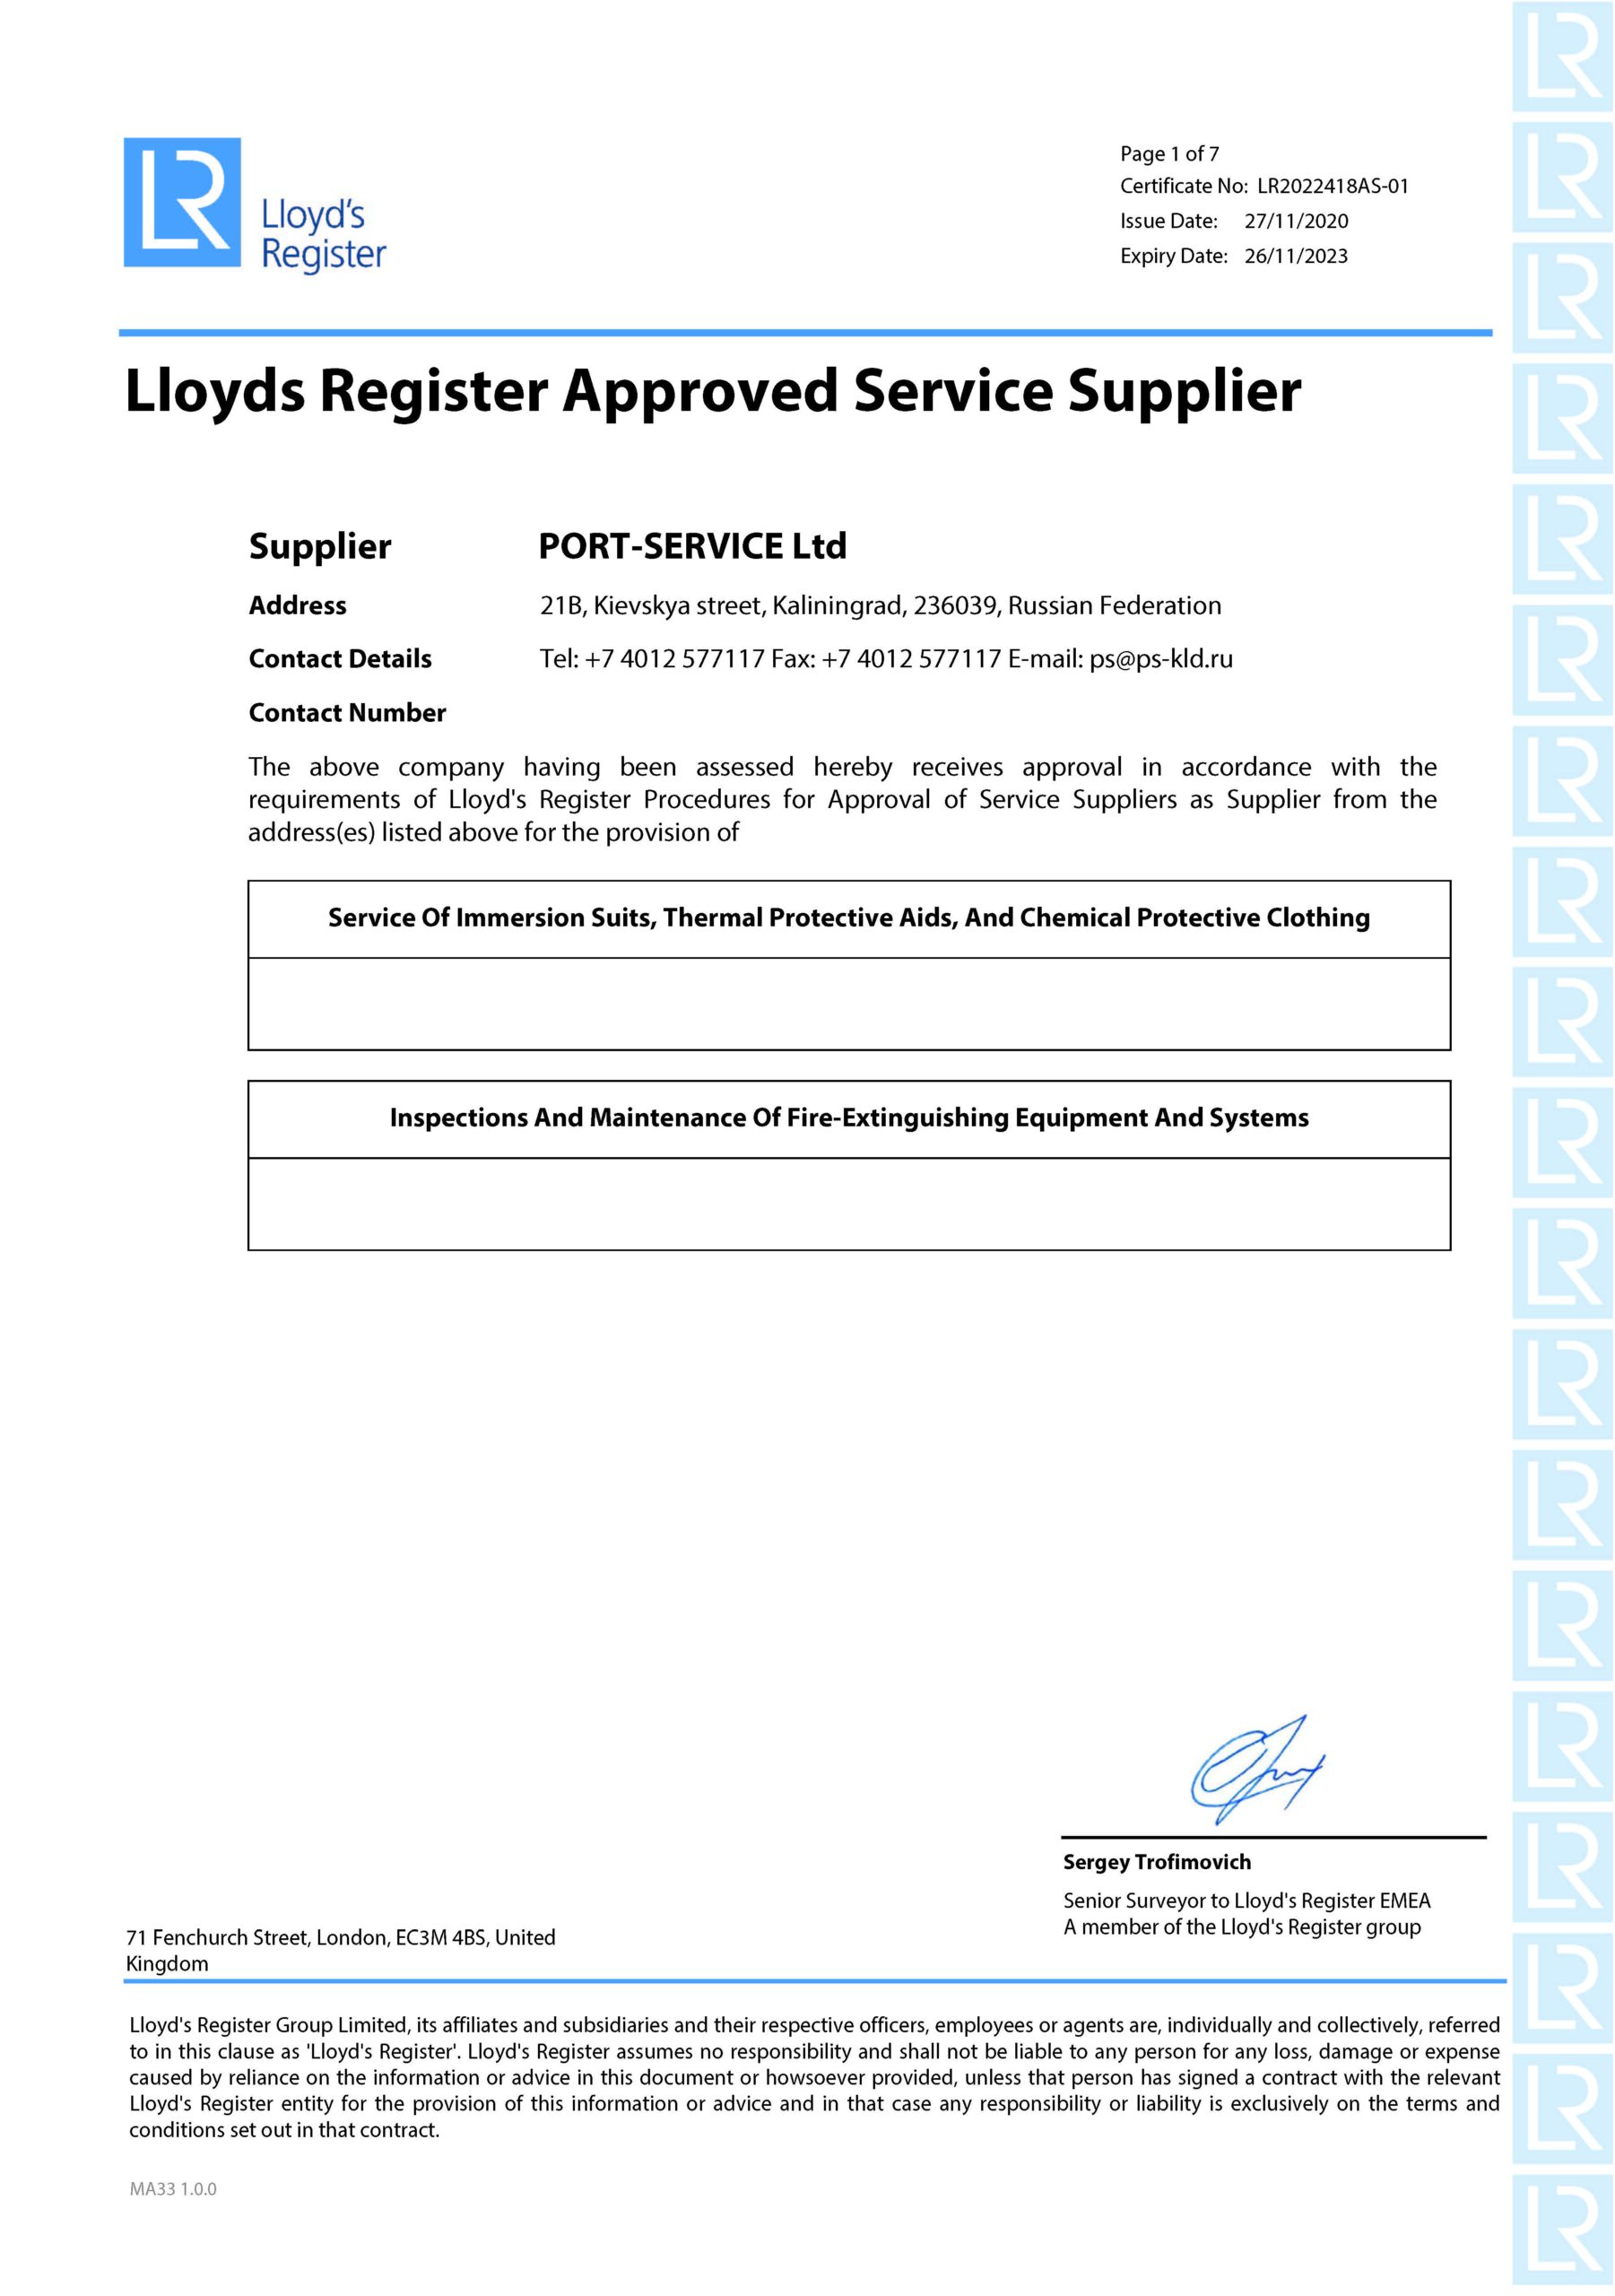 LR Lloyd's Registors_Страница_1